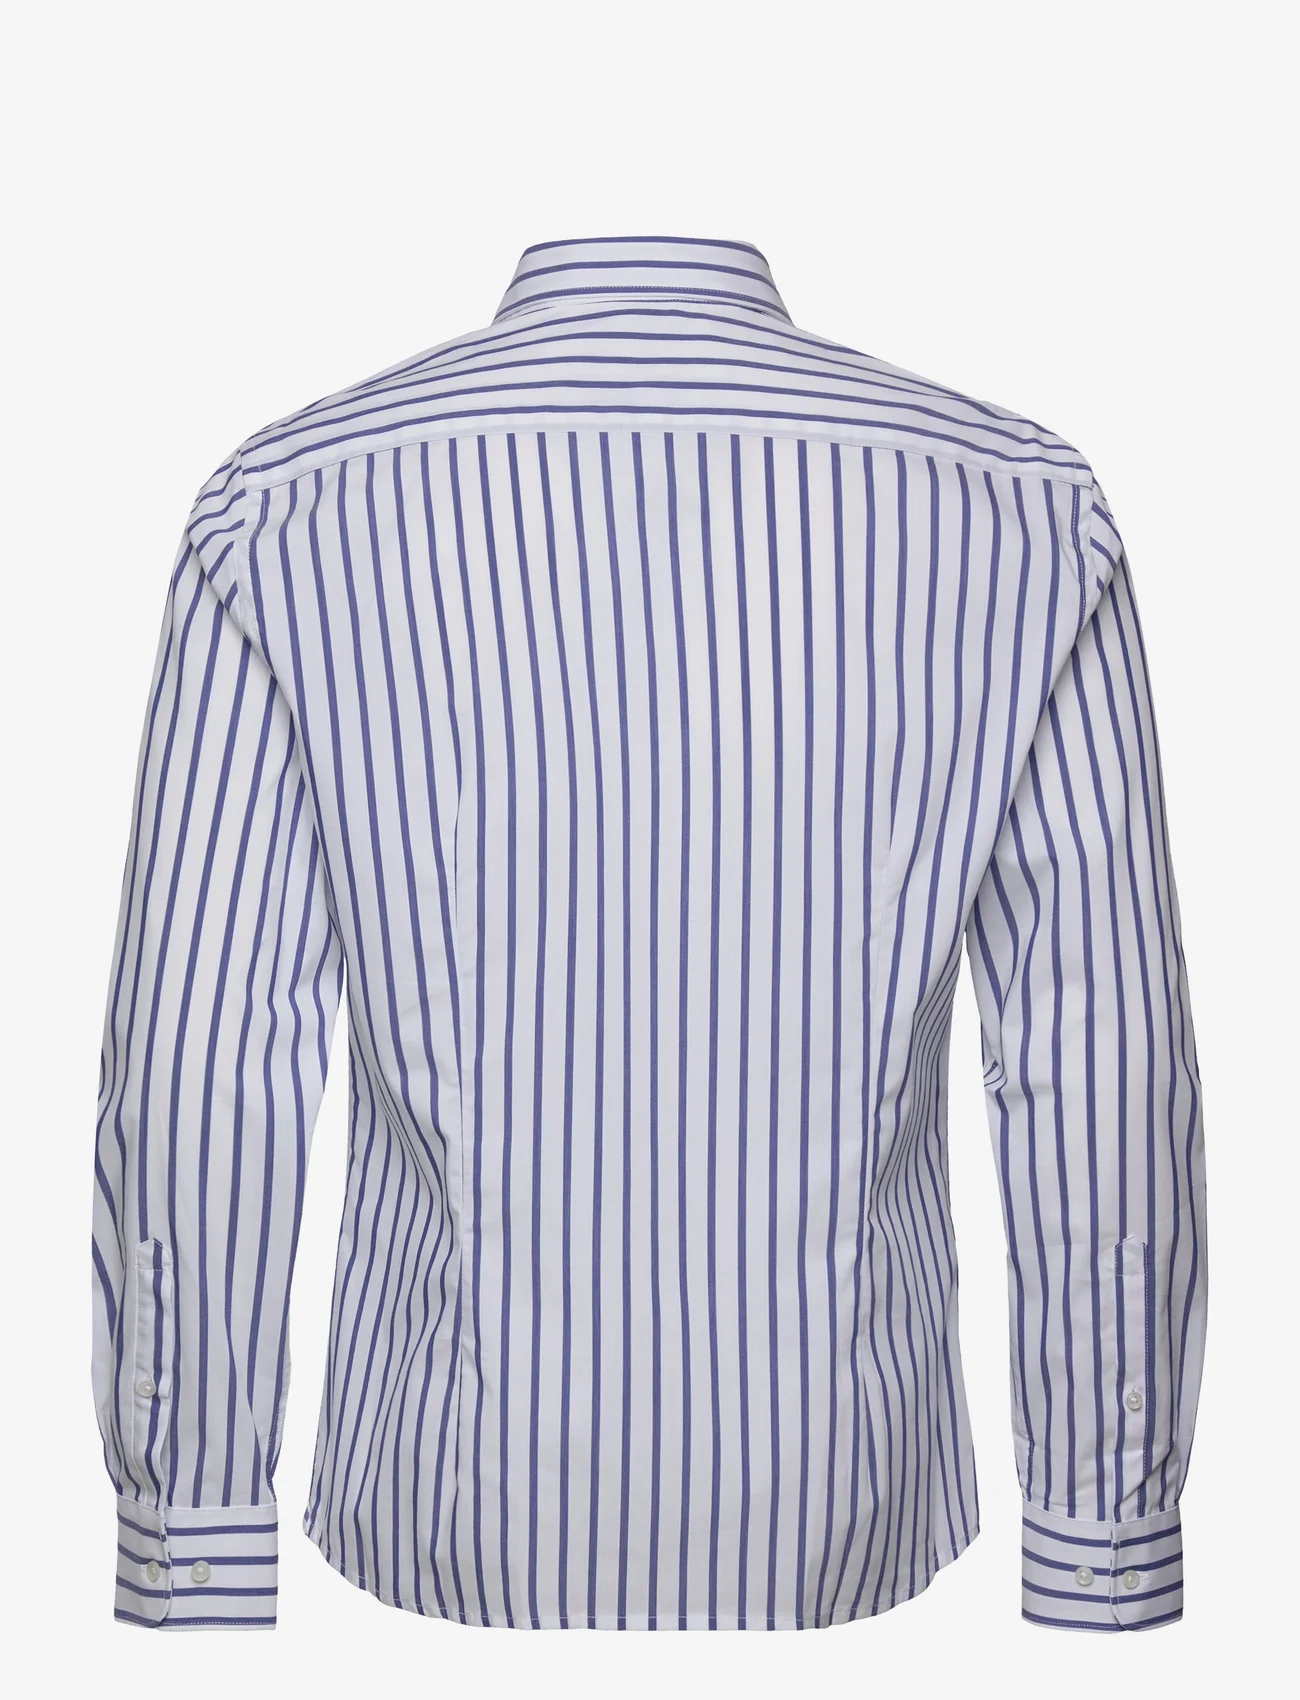 Mango - Slim fit striped cotton shirt - penskjorter - white - 1